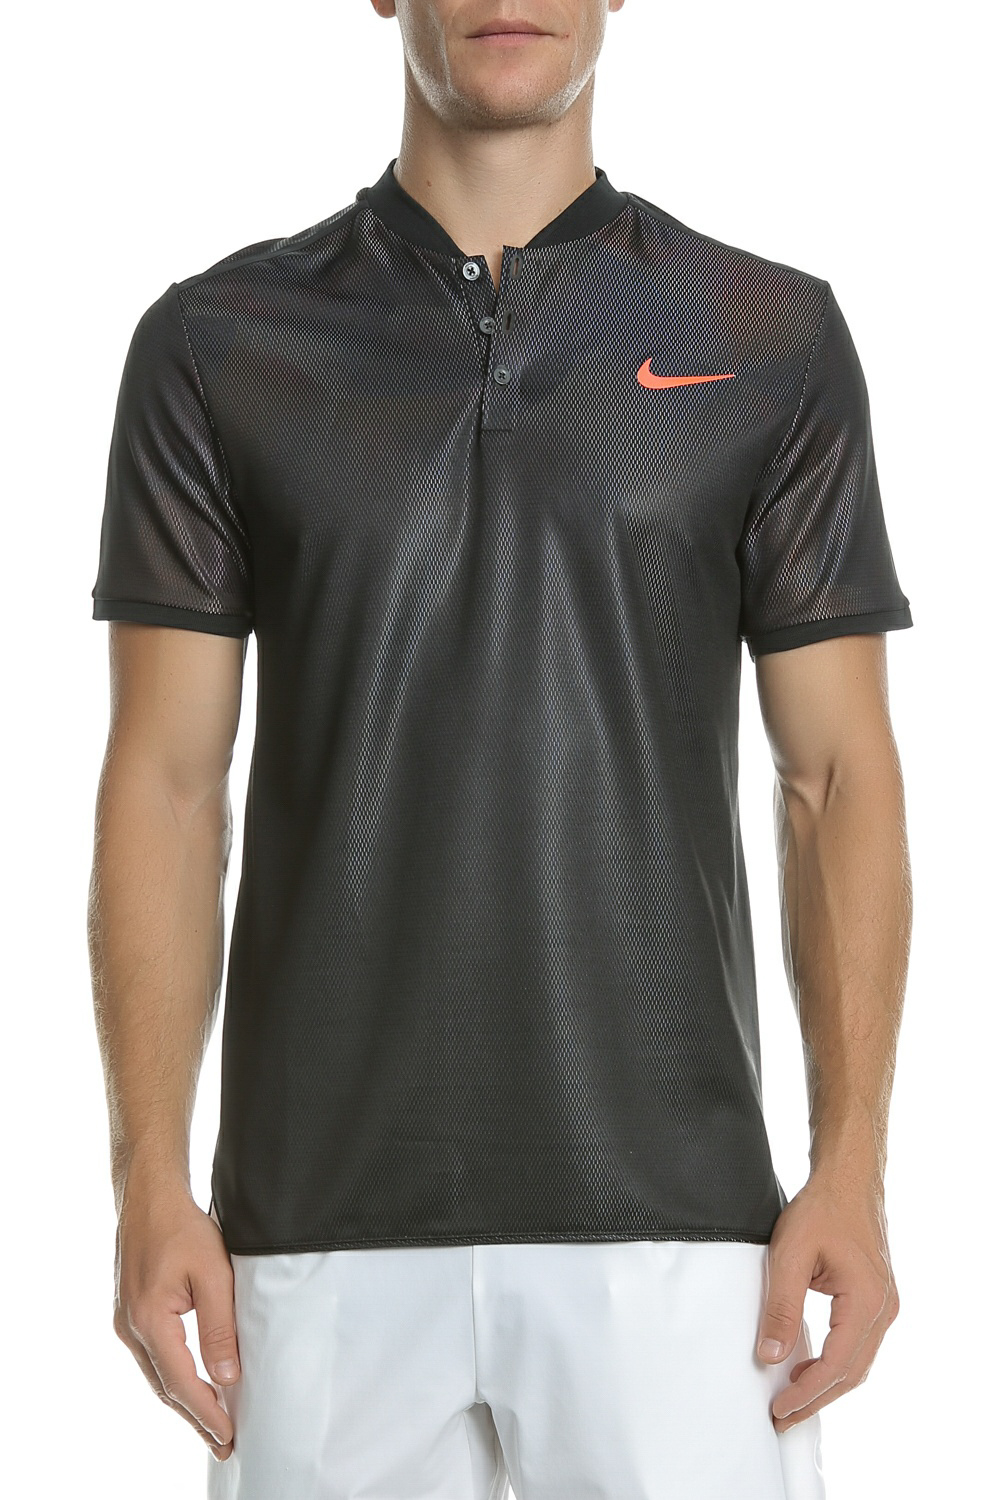 NIKE - Κοντομάνικη πόλο μπλούζα NIKE μαύρη Ανδρικά/Ρούχα/Αθλητικά/T-shirt